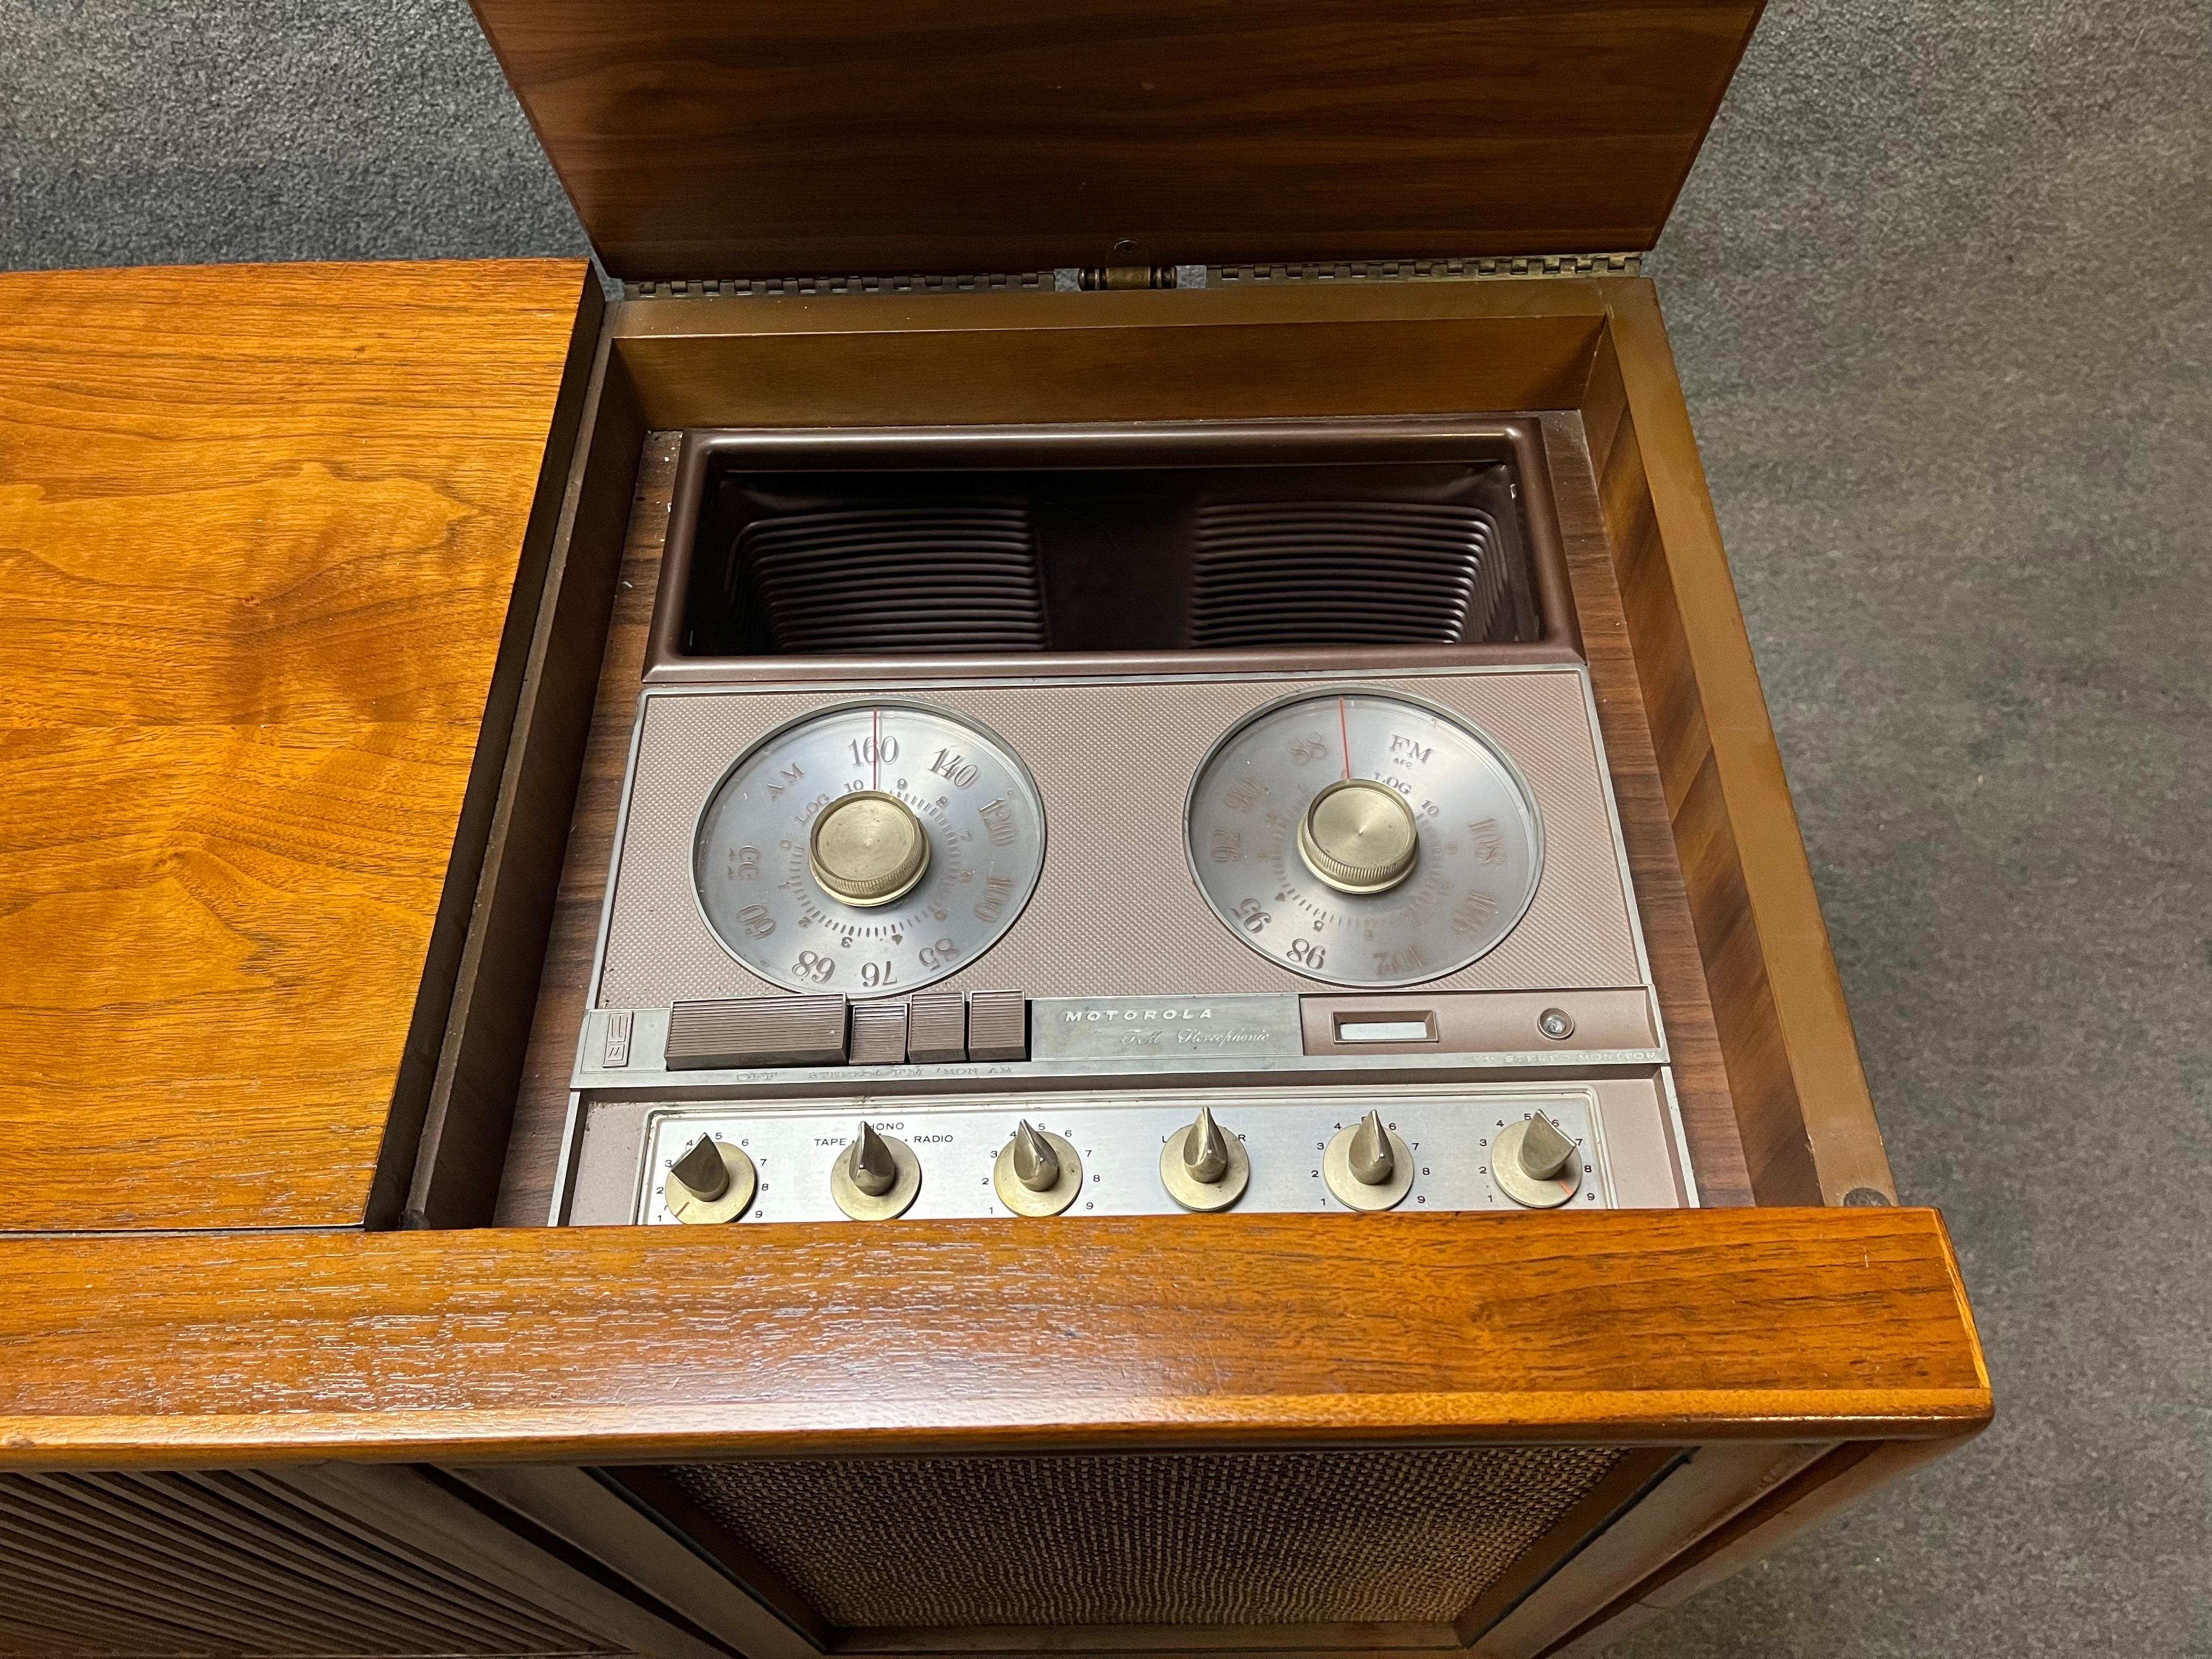 1960s motorola console stereo